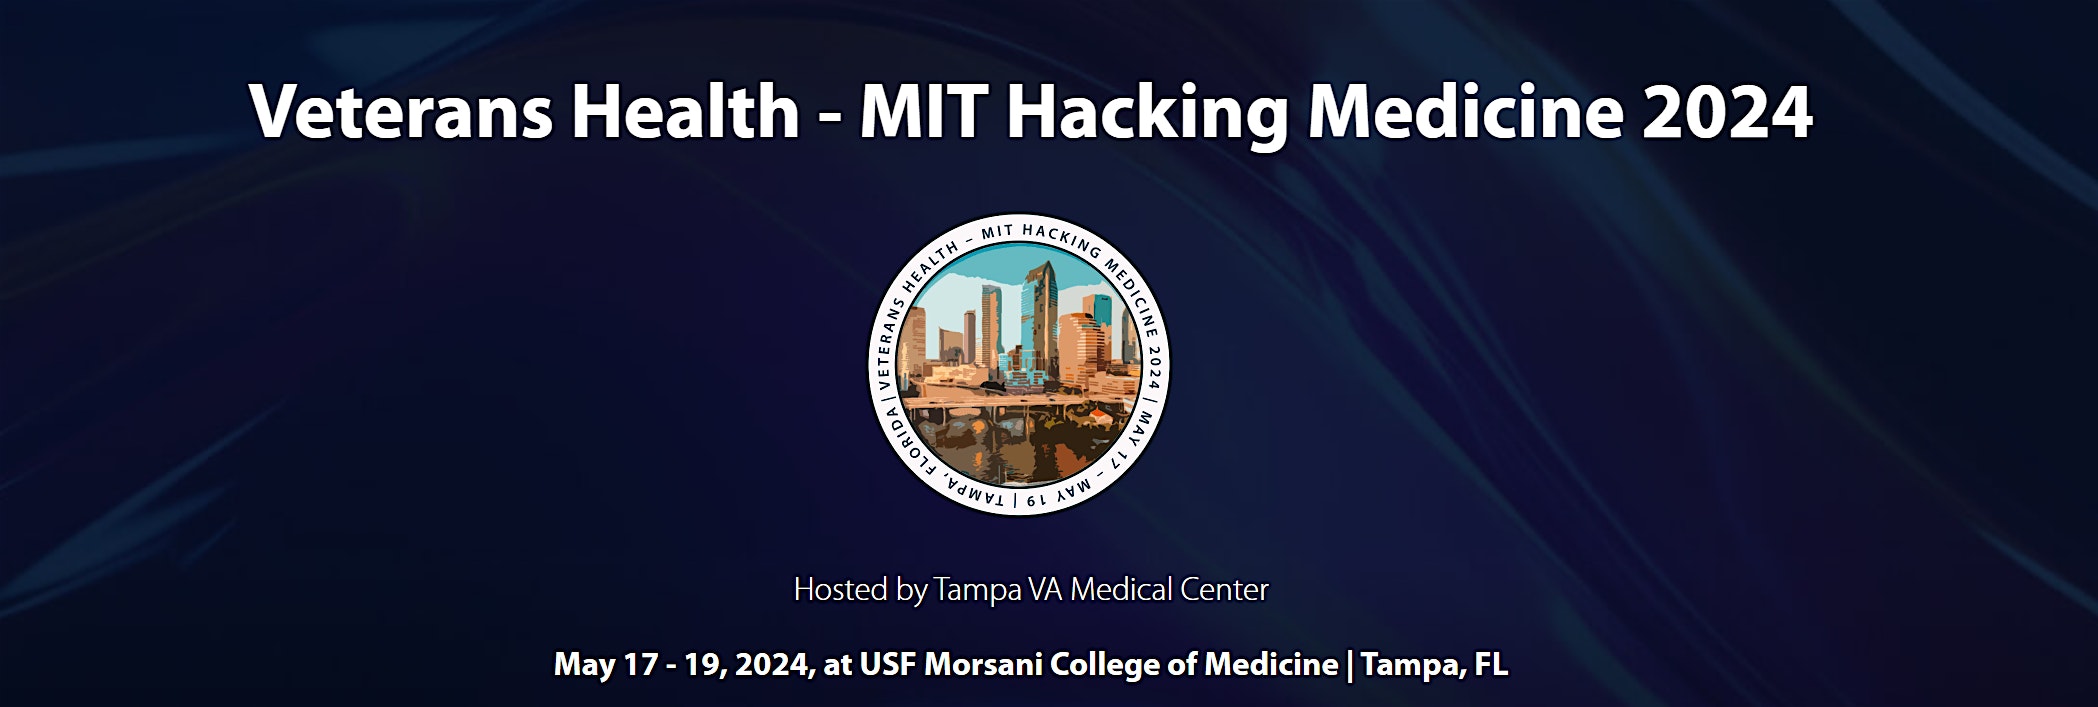 Veterans Health - MIT Hacking Medicine 2024